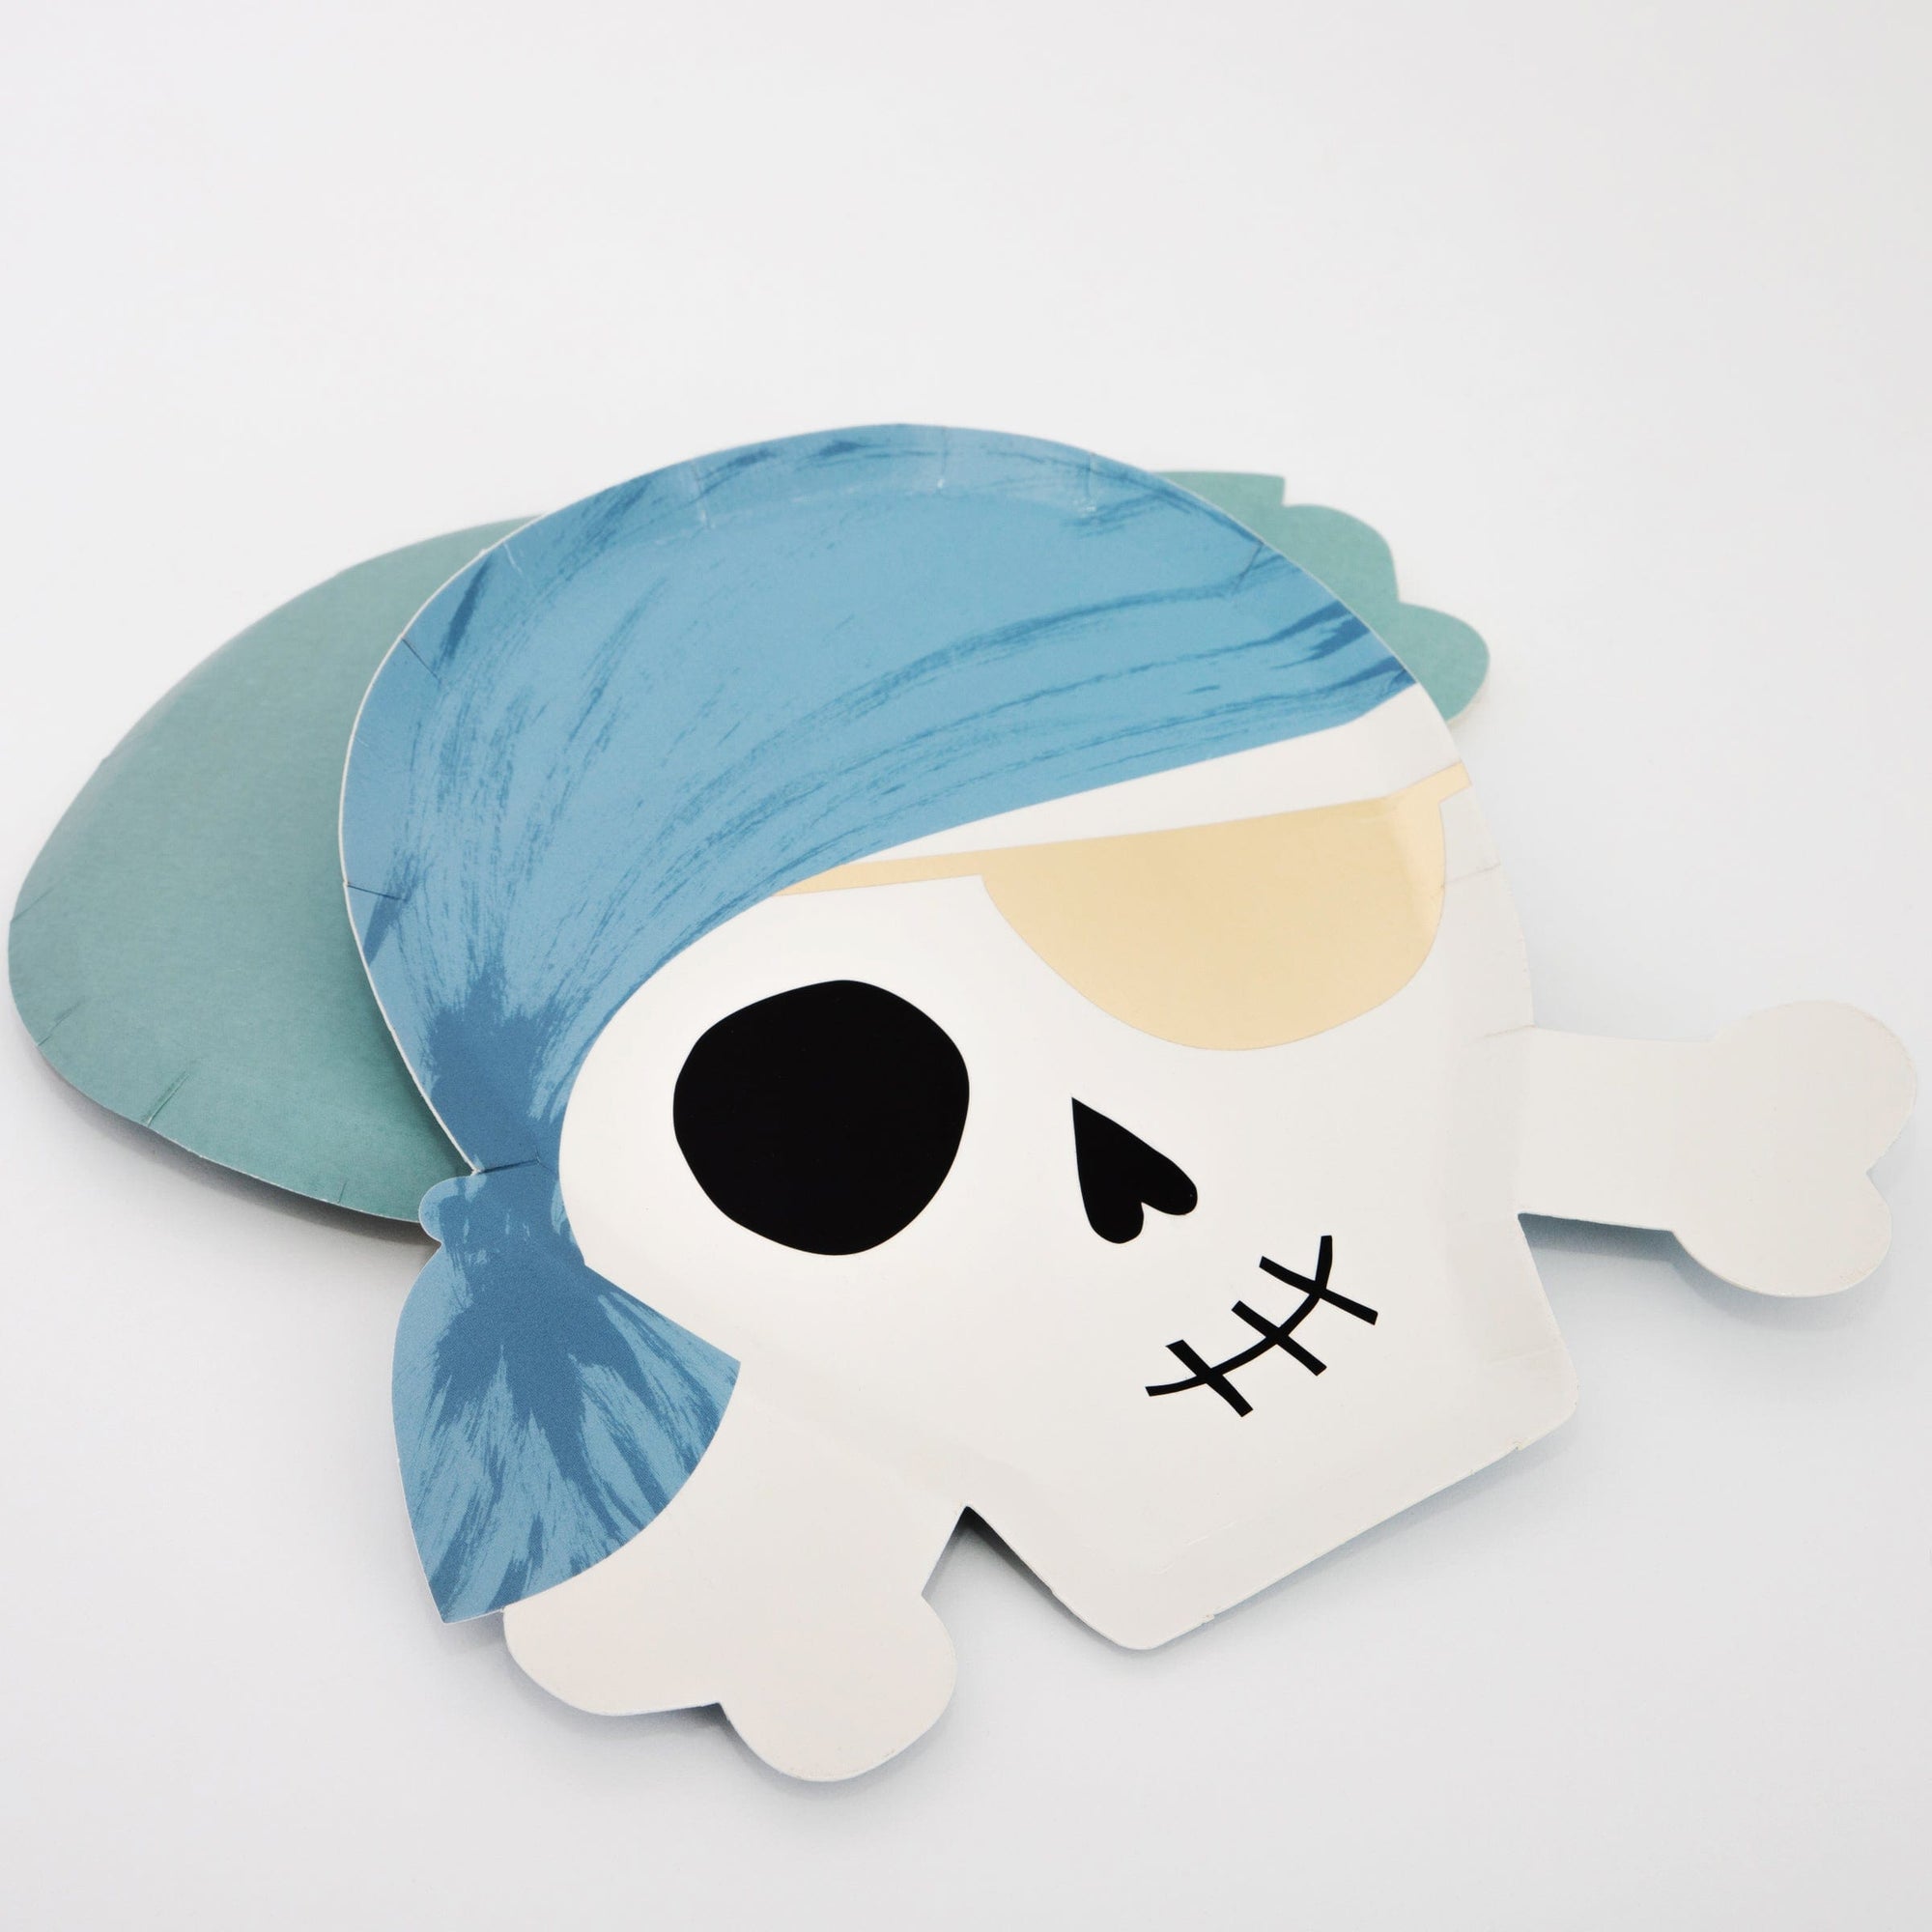 Pirate Skull Plates